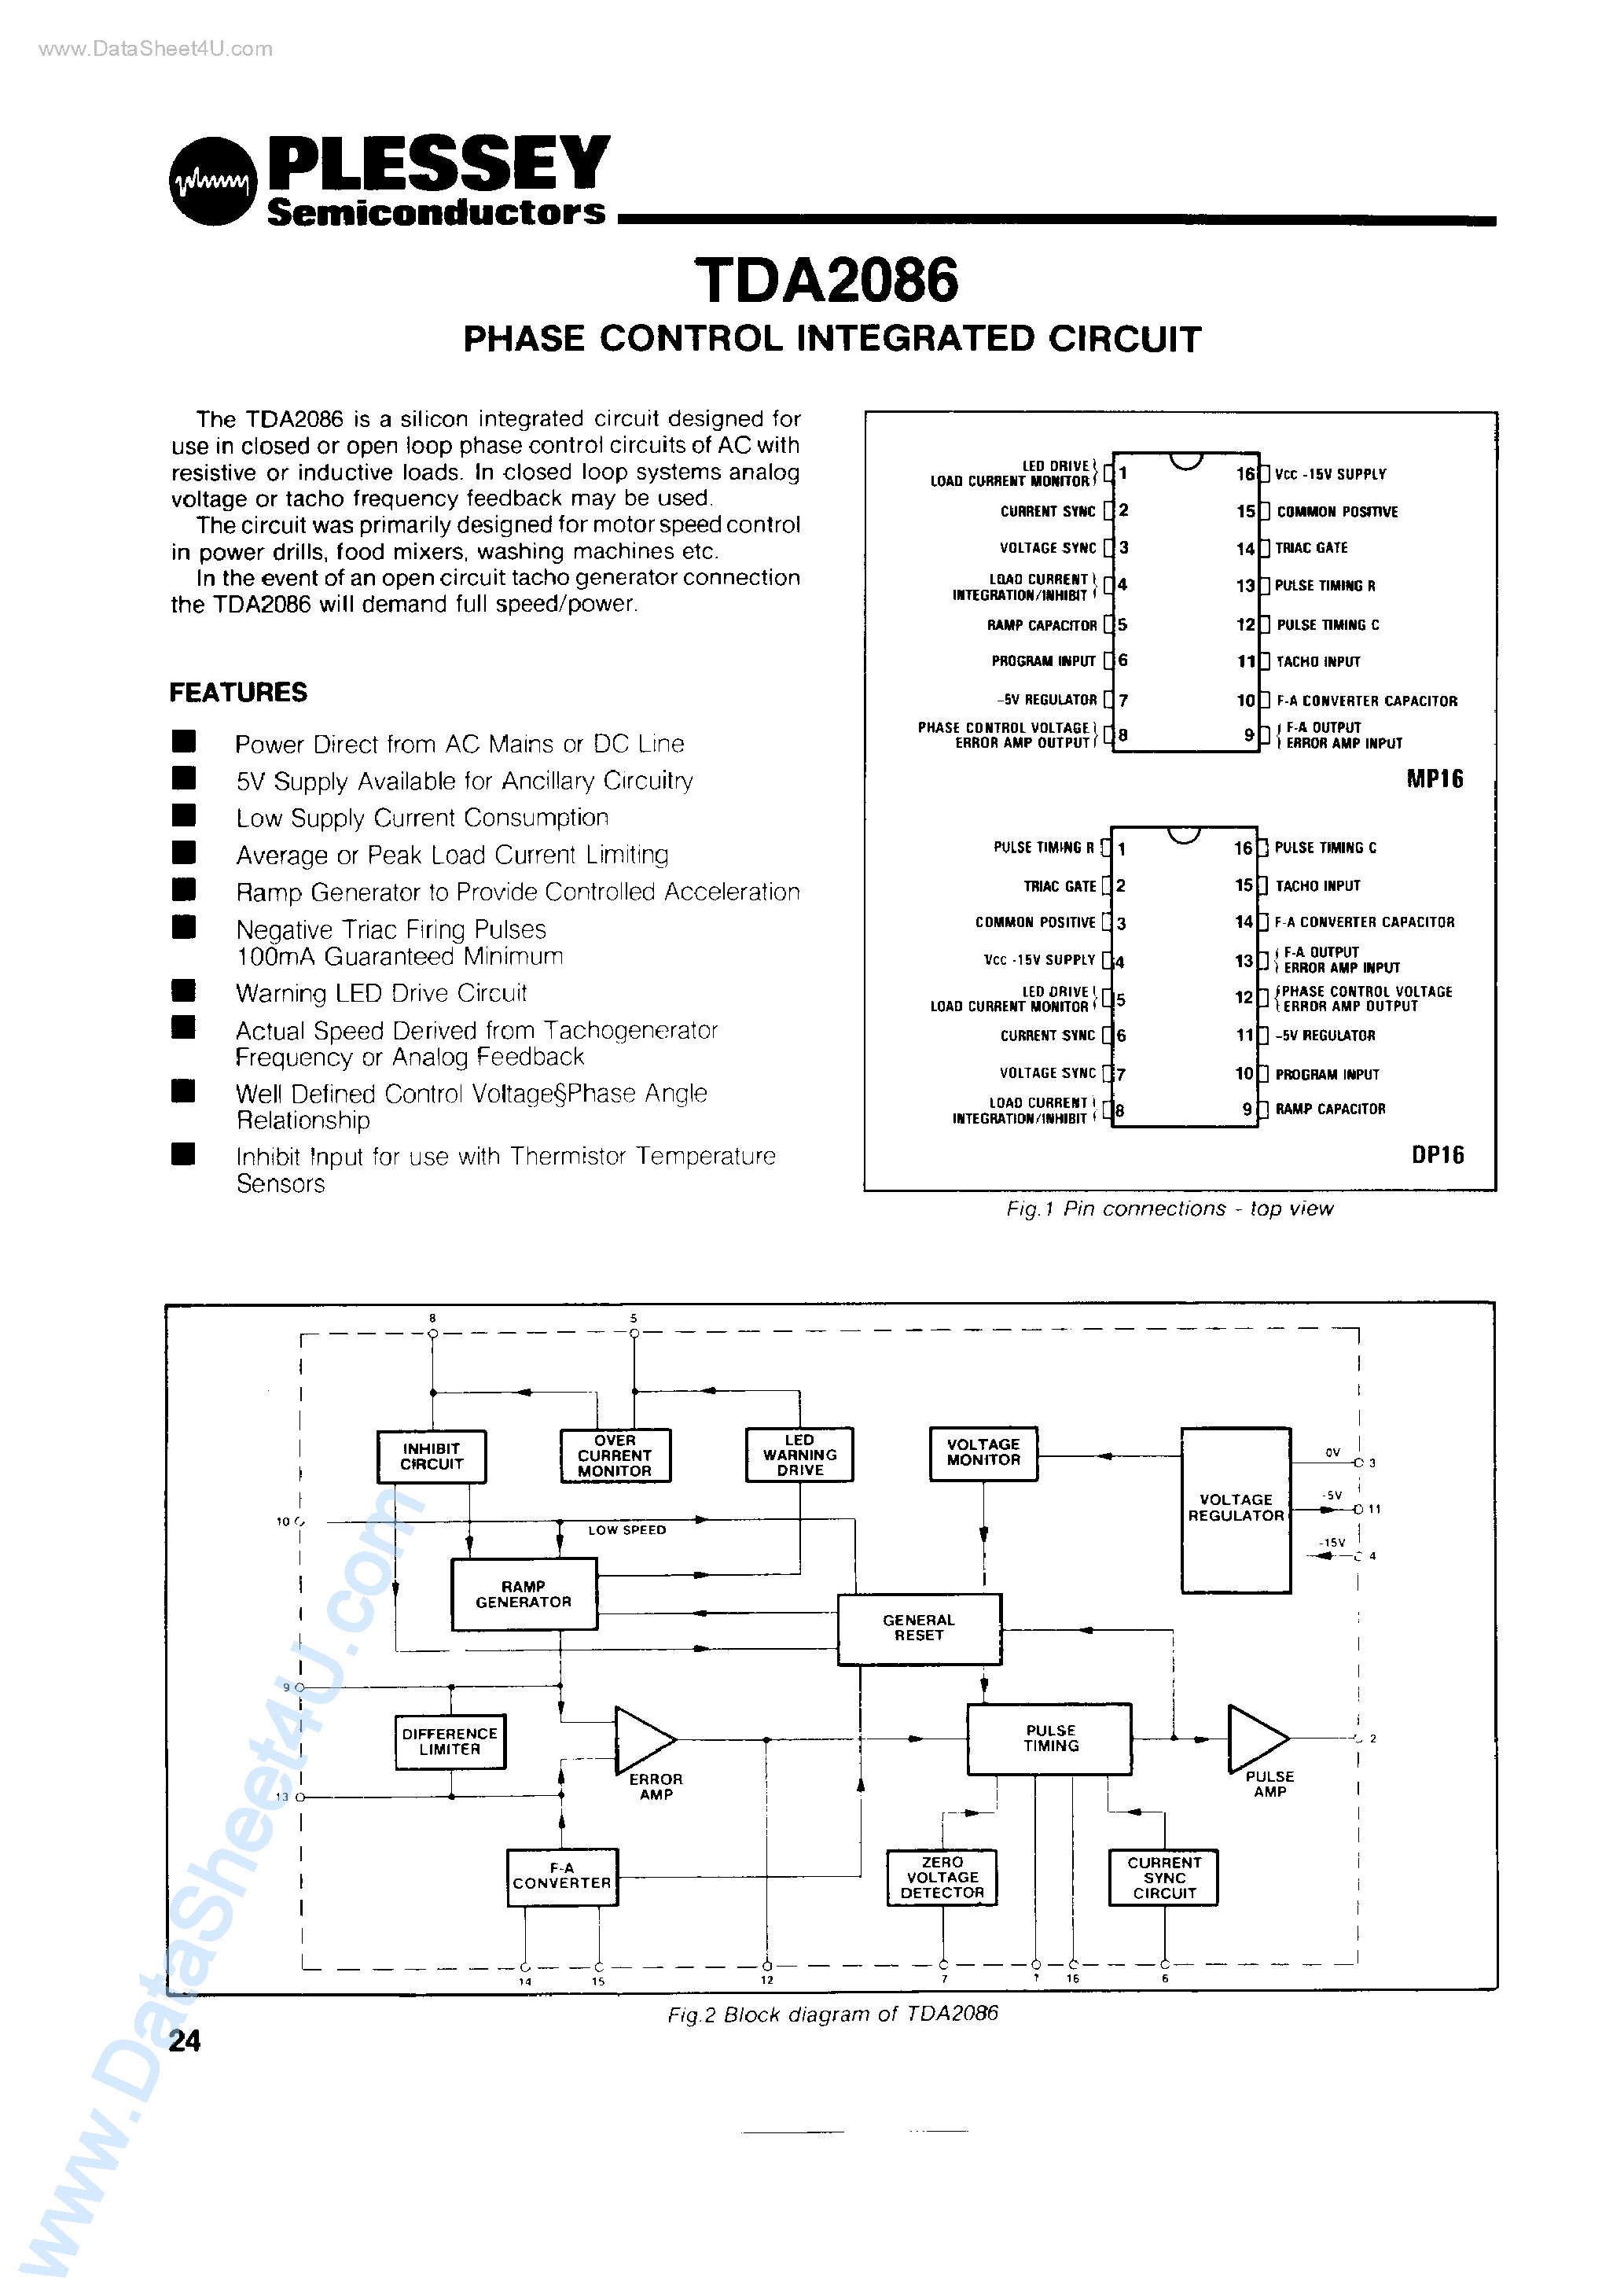 Даташит TDA-2086 - Phase Control Integrated Circuit страница 1